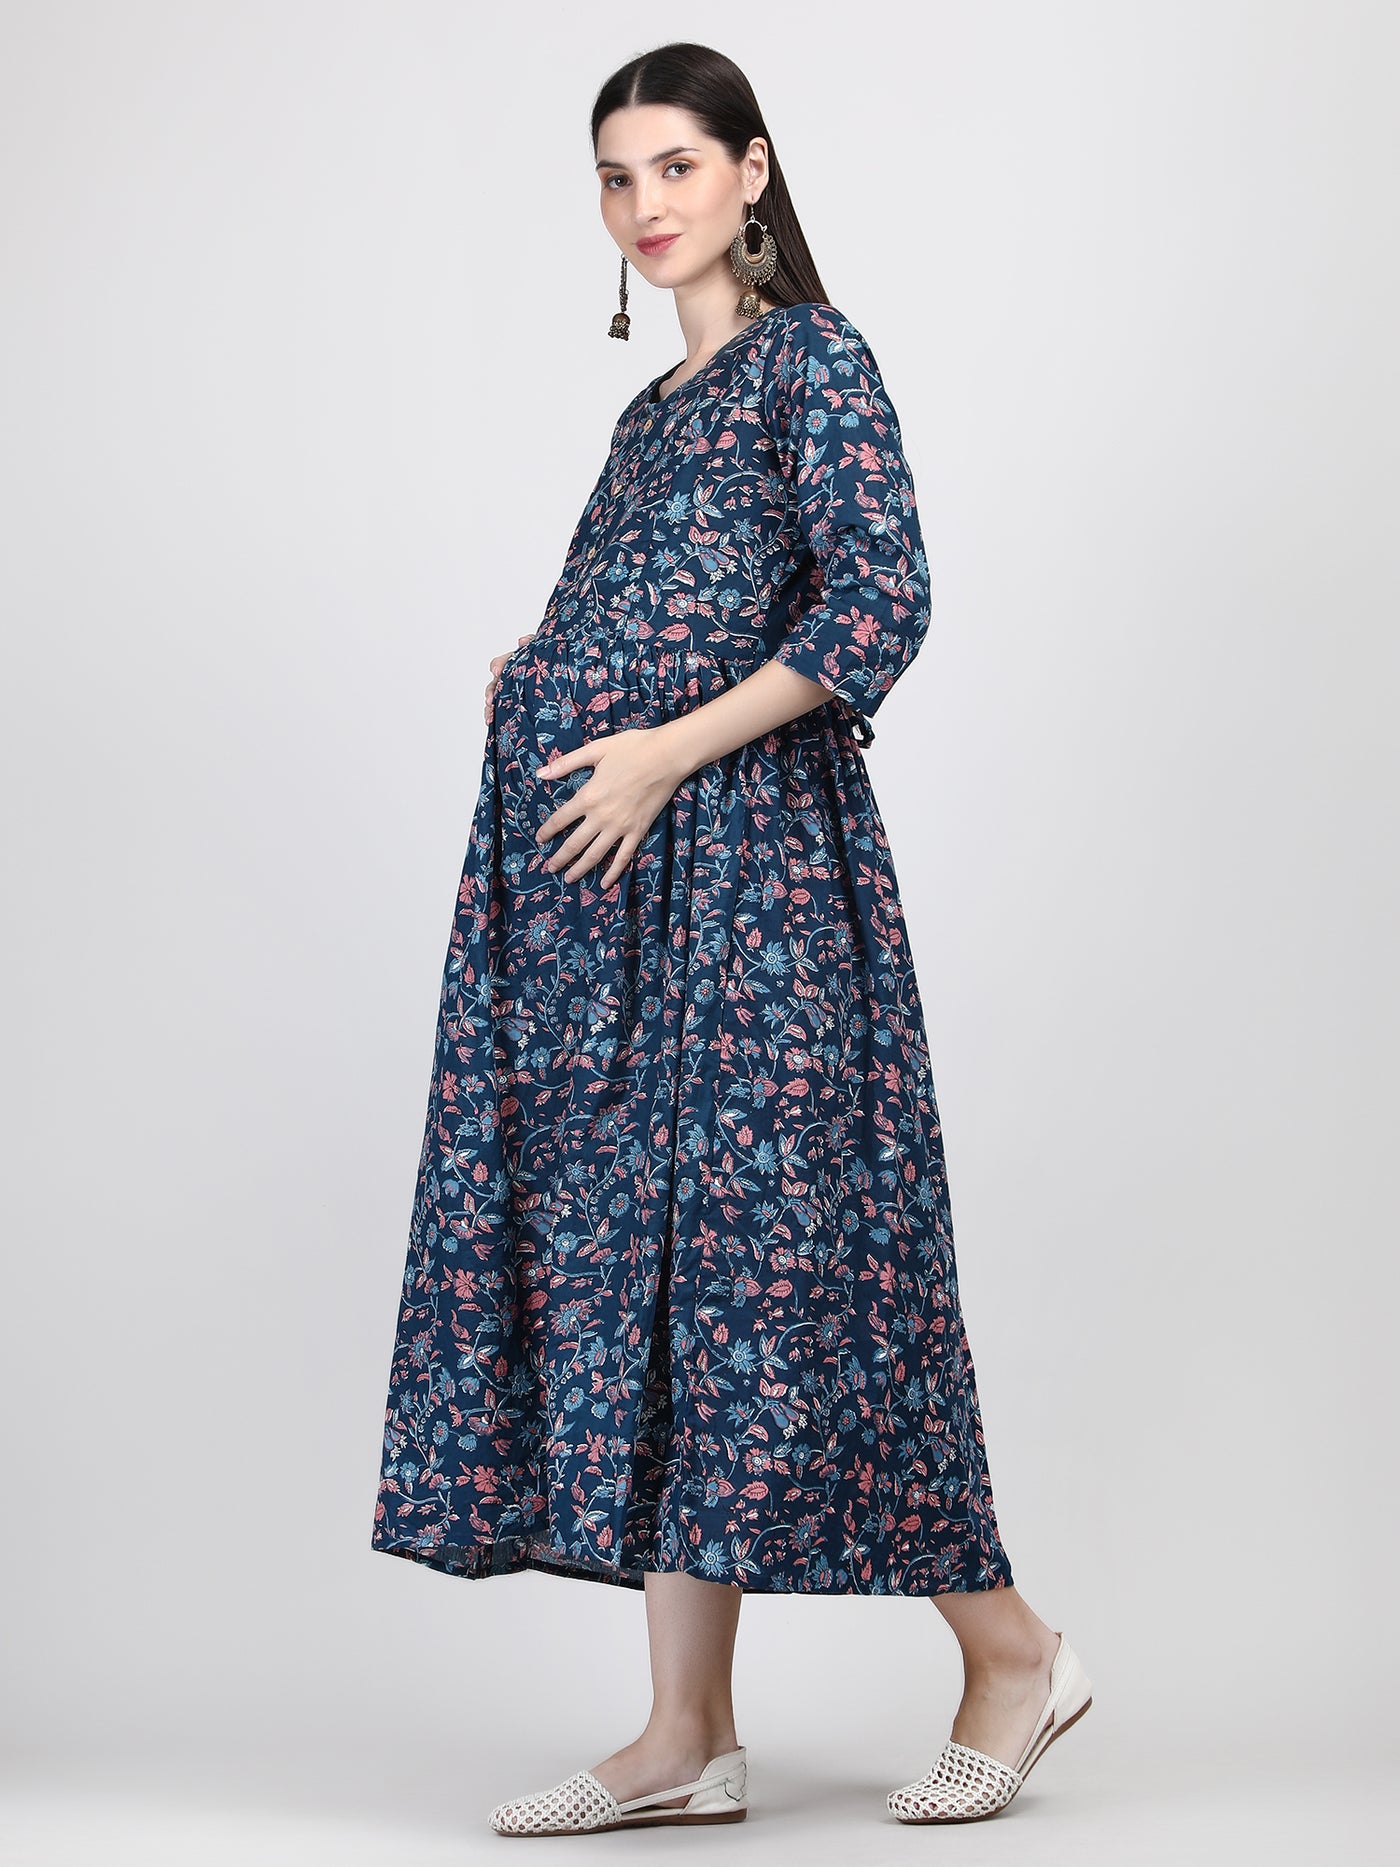 Indian Maternity Casual Breastfeeding Night Gown Maxi Dress Printed kurta  Tunic | eBay